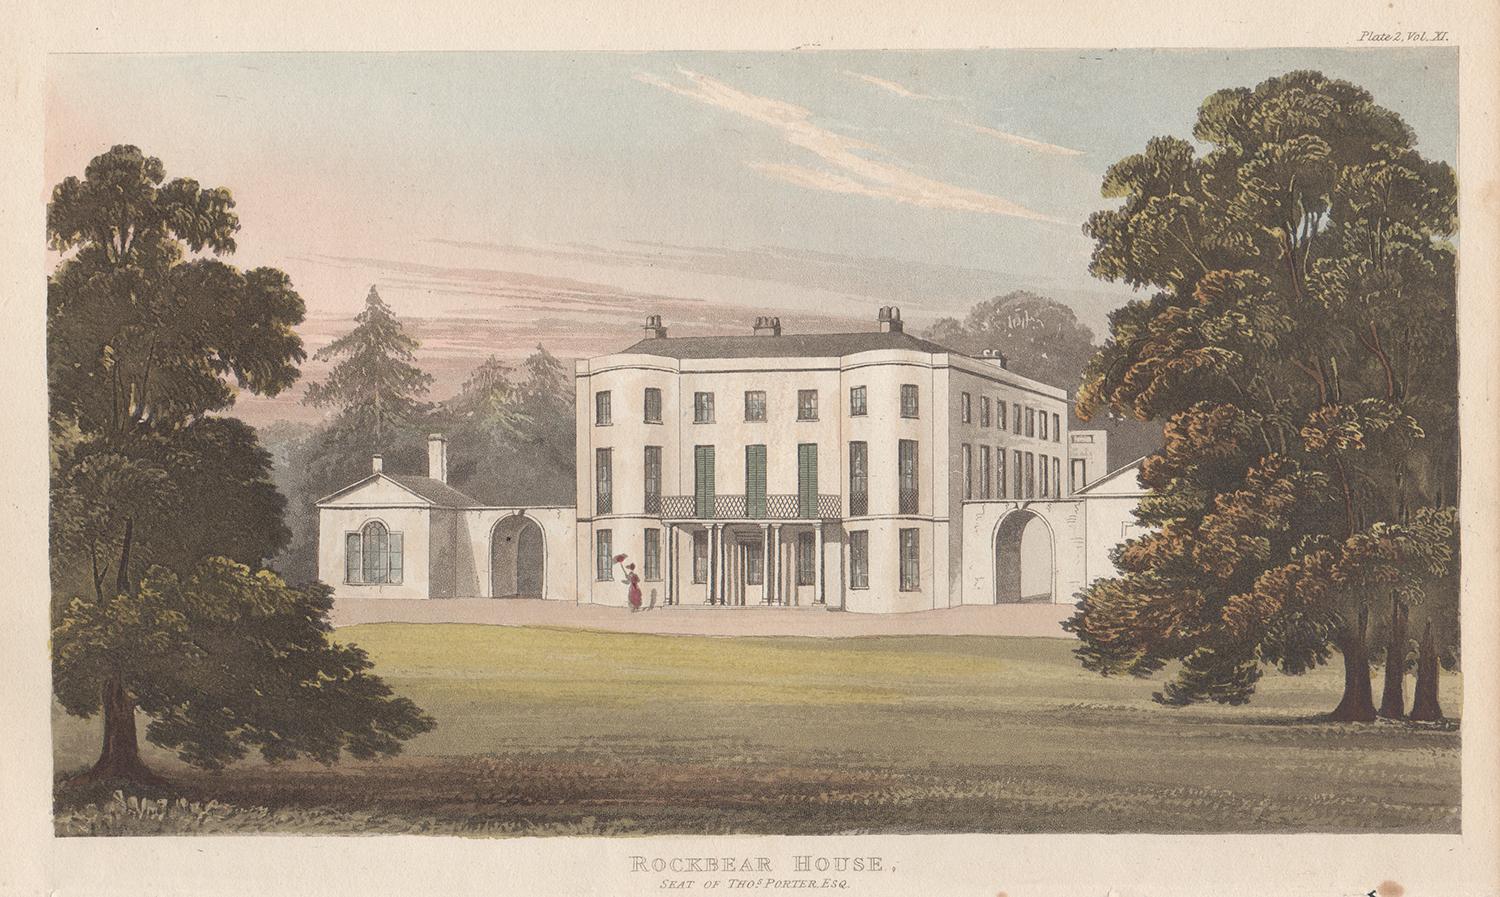 Unknown Landscape Print - Rockbear House, Devon, English Regency country house colour aquatint, 1818